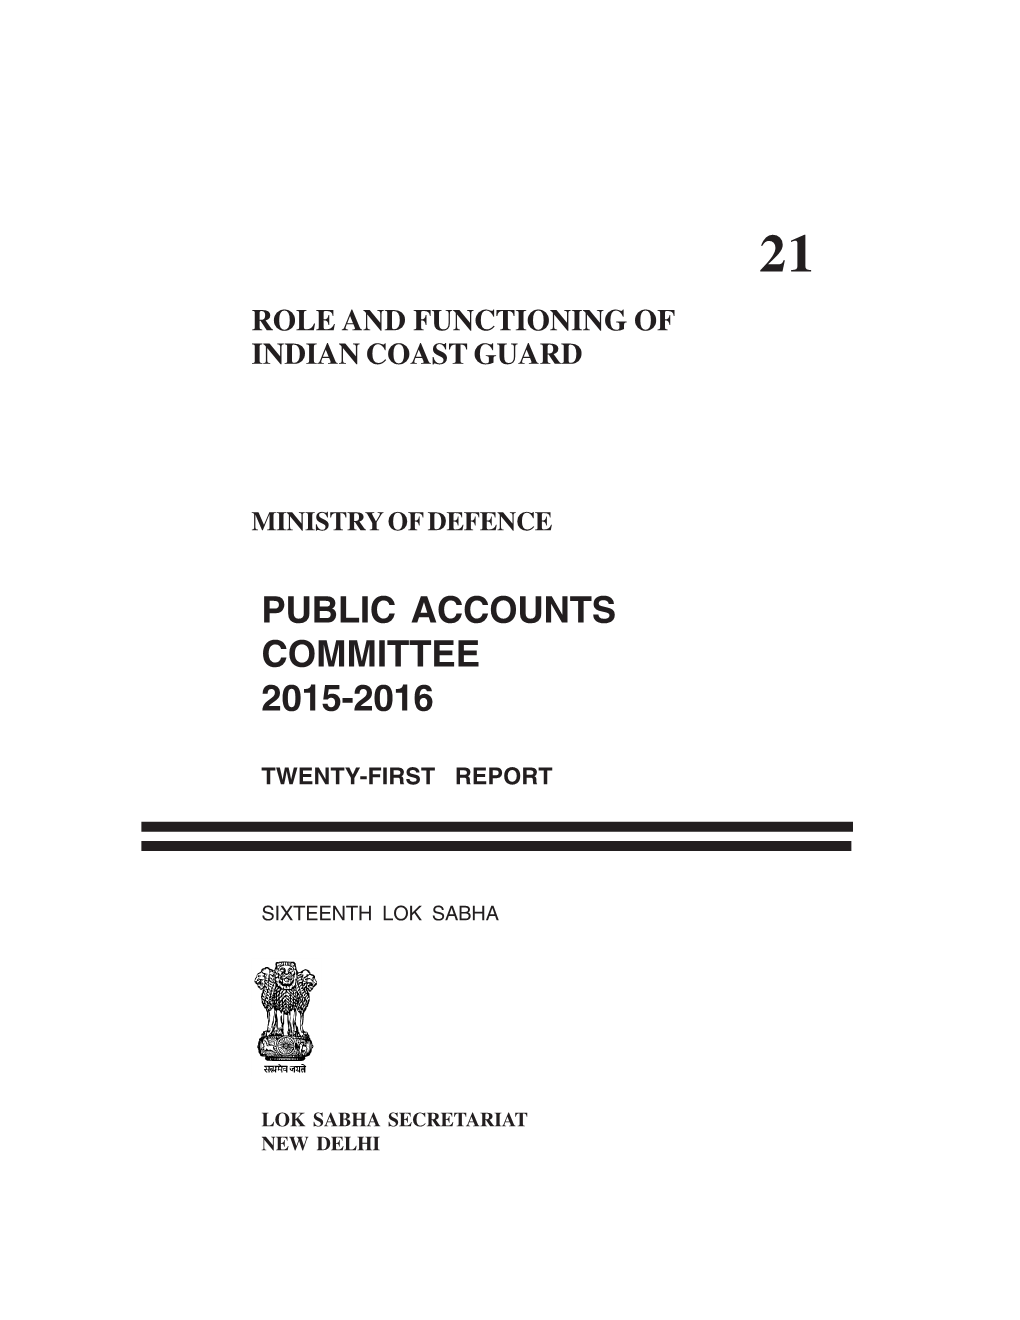 Public Accounts Committee 2015-2016